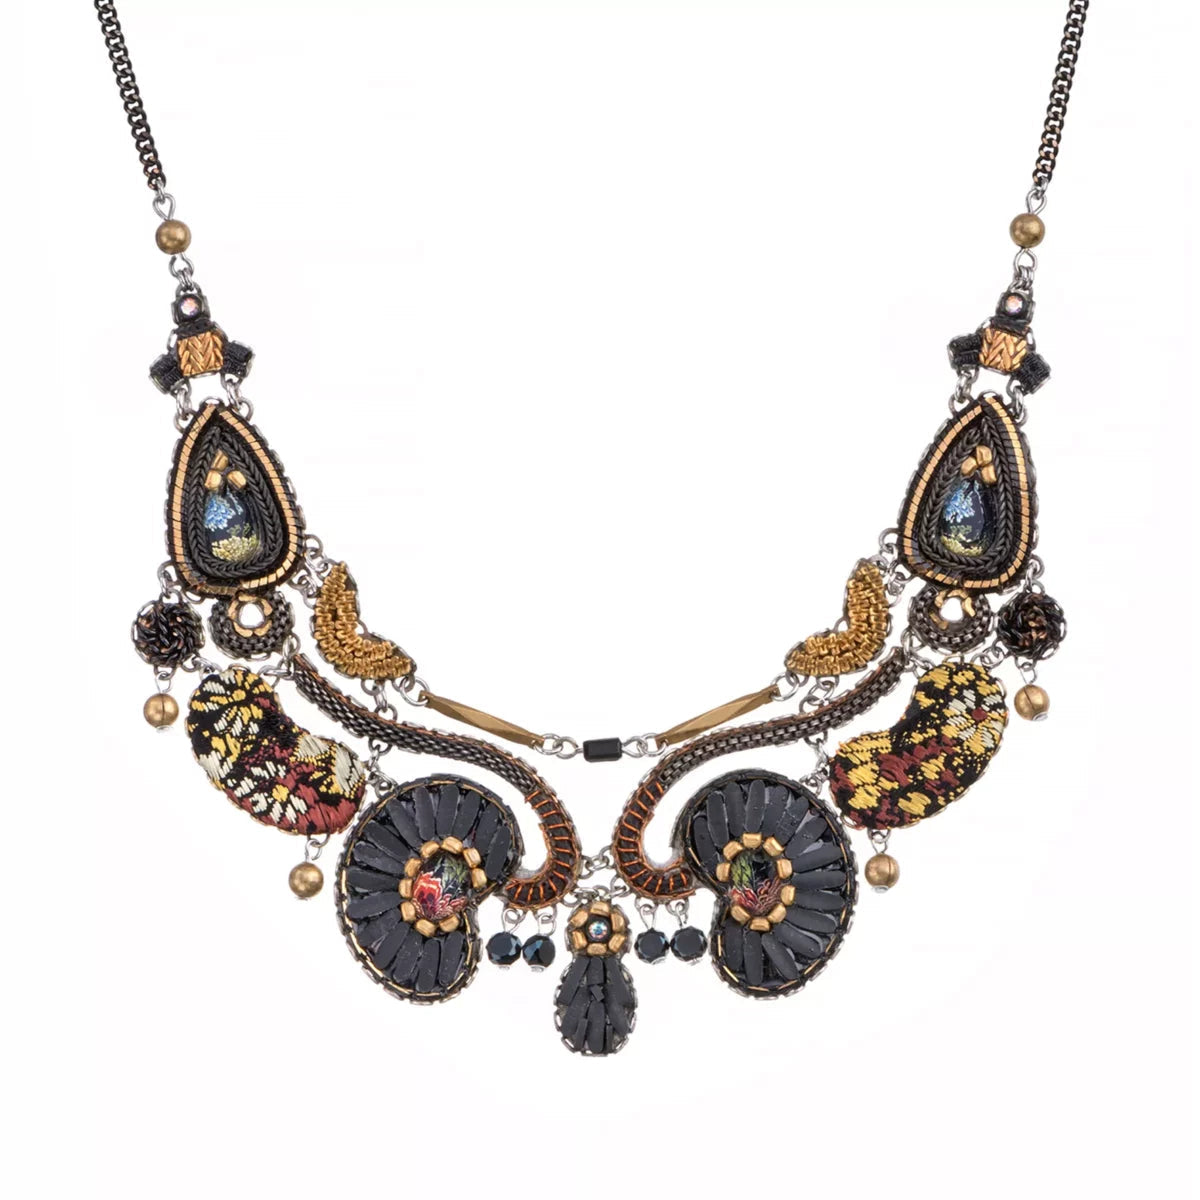 Royalty Kefira Necklace - The Nancy Smillie Shop - Art, Jewellery & Designer Gifts Glasgow